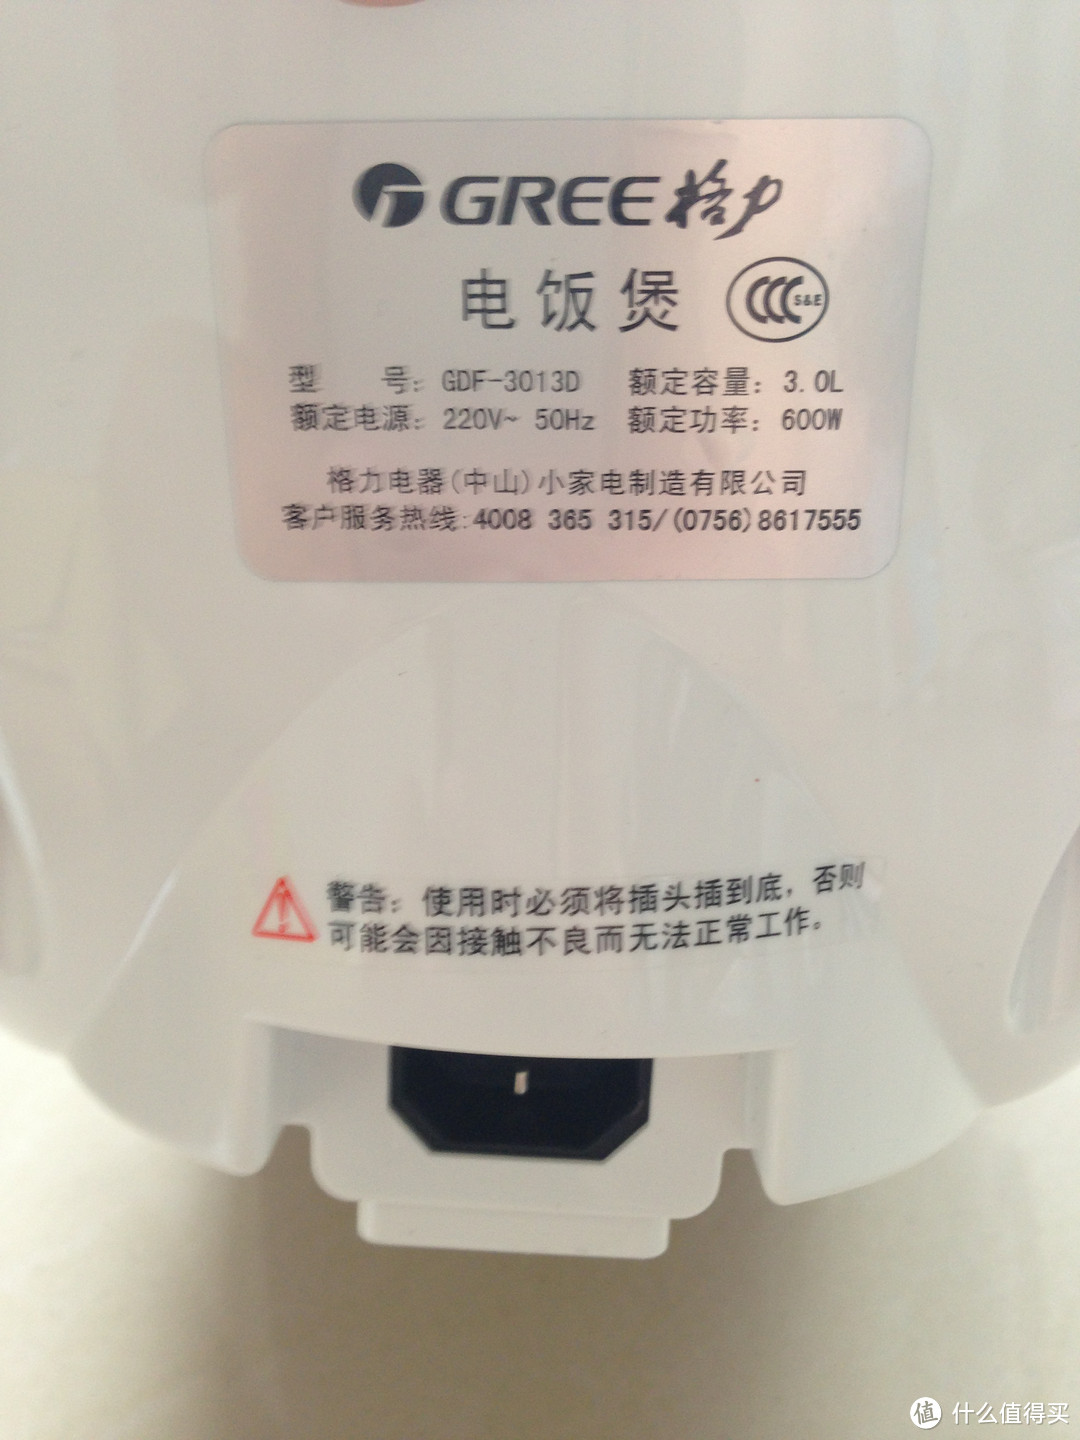 GREE 格力 GDF-3013D 99.5元 电饭煲 3L